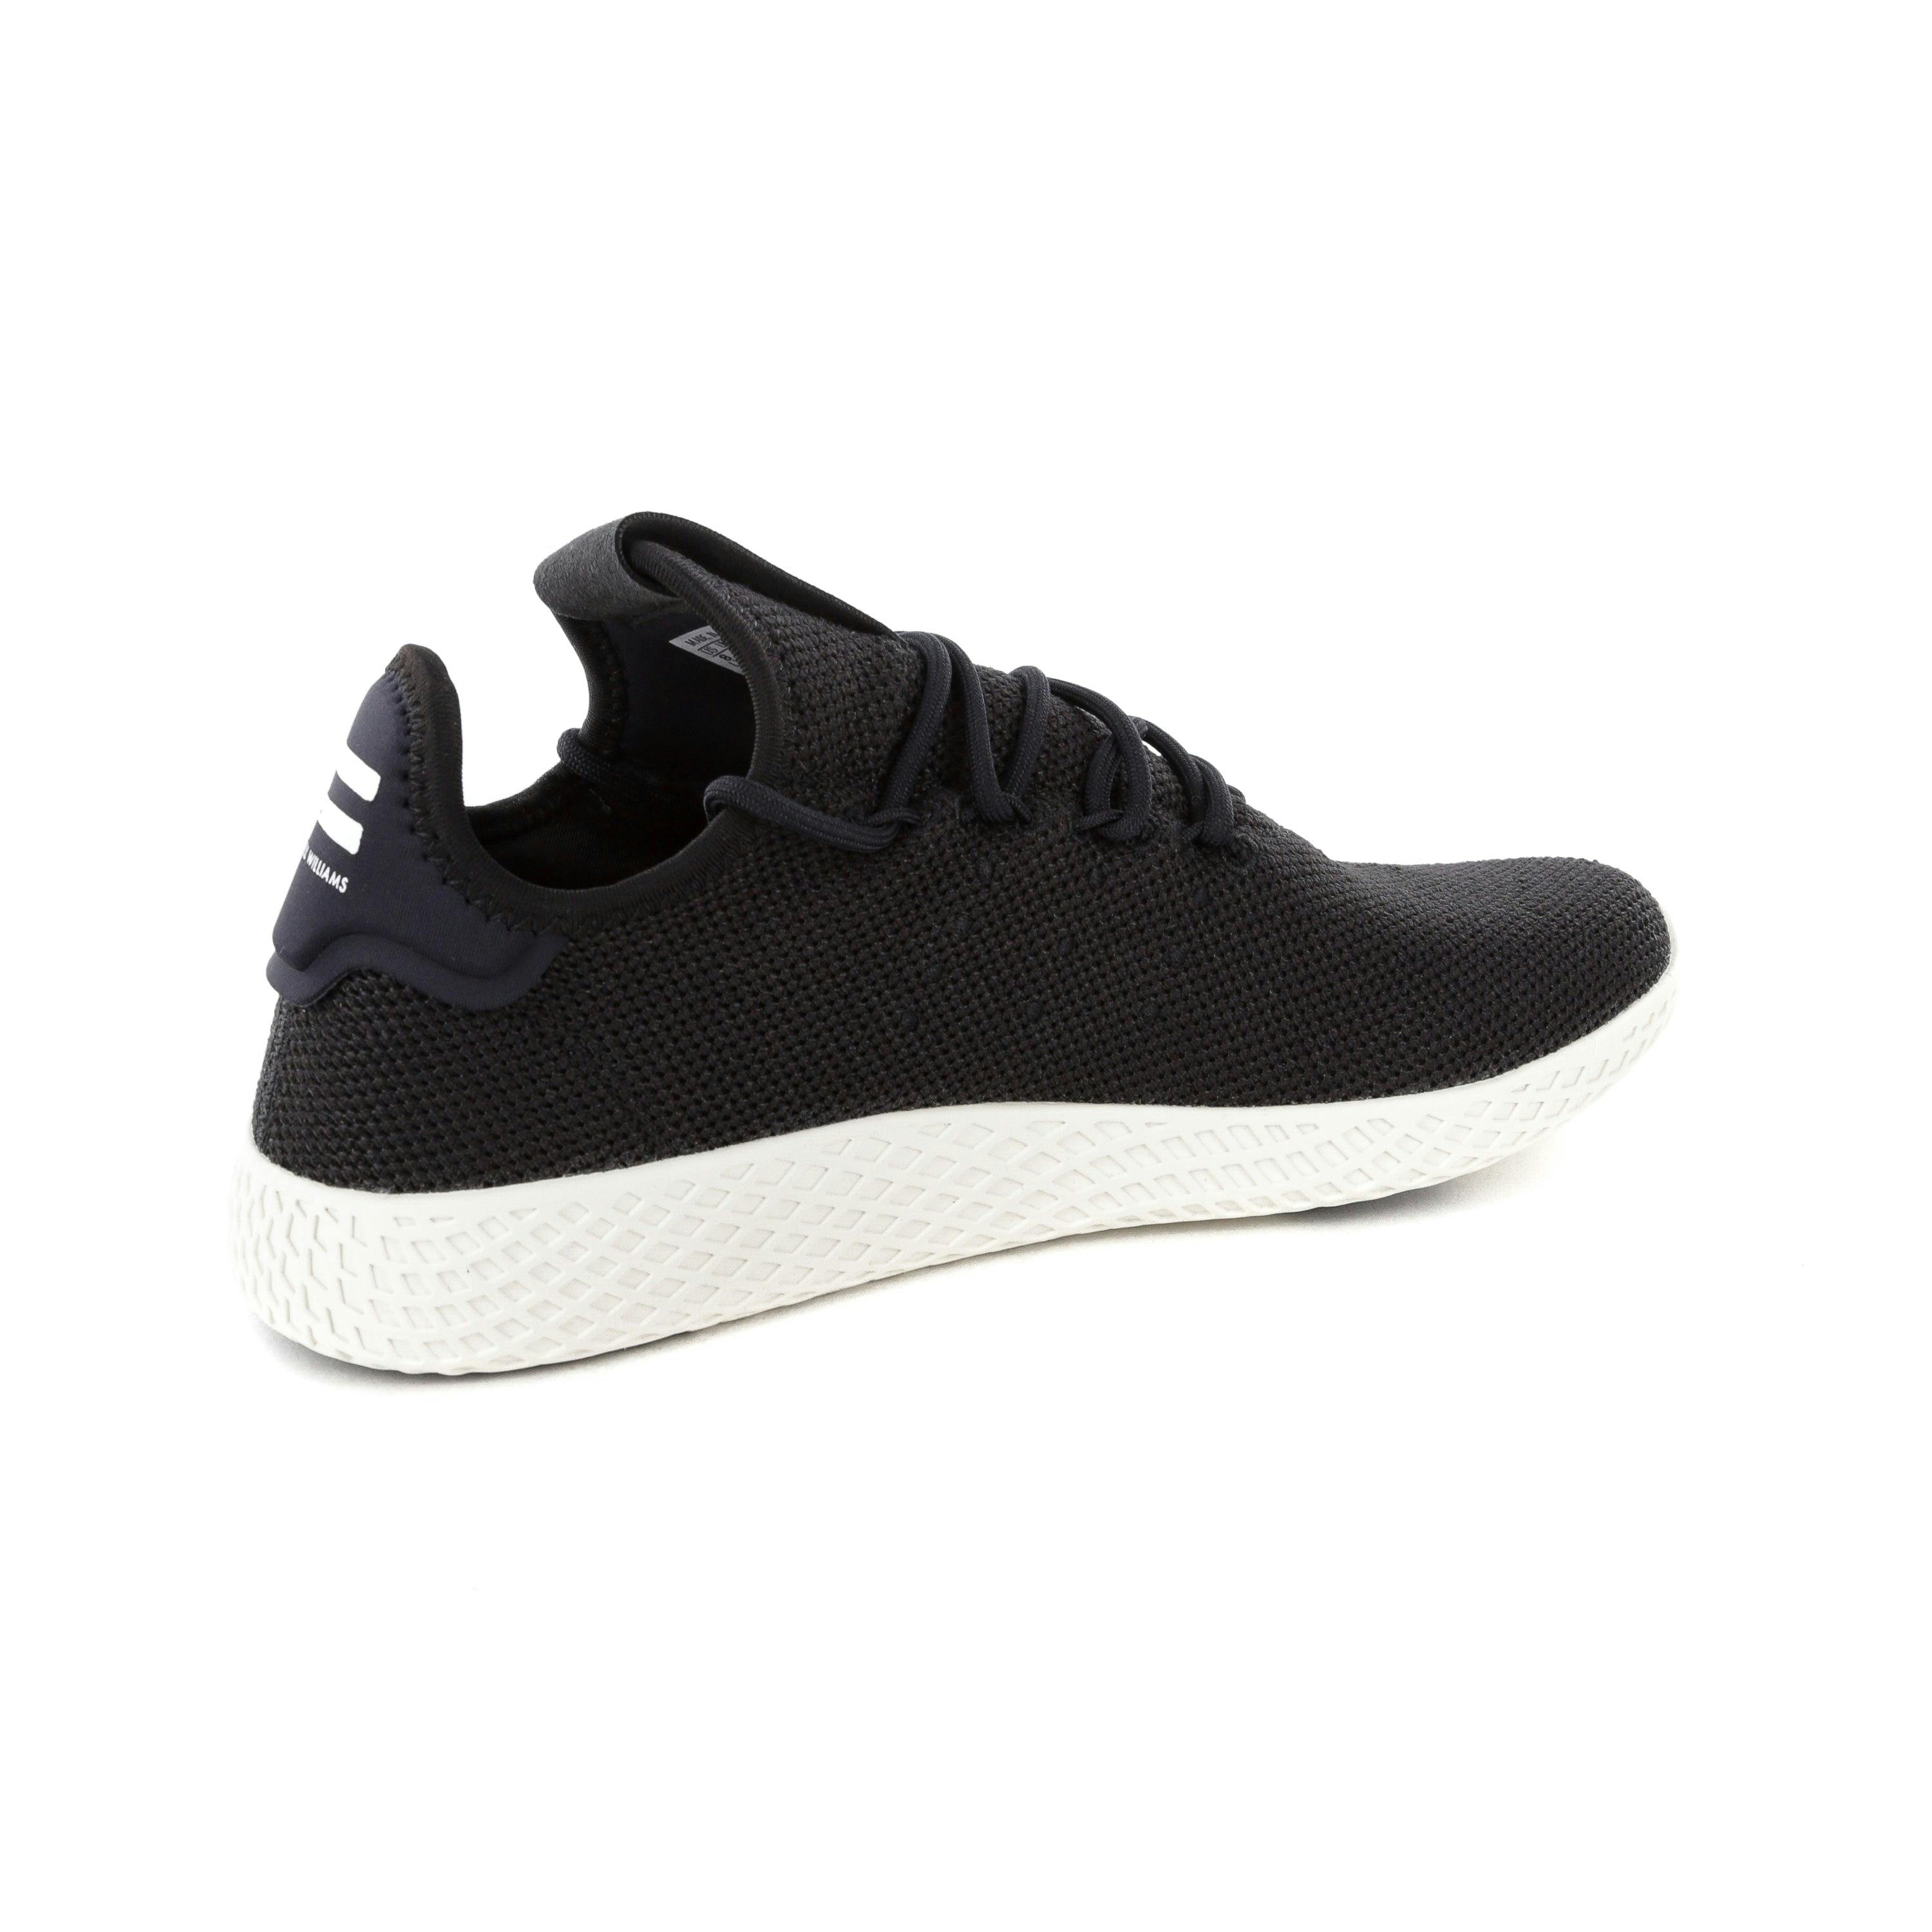 Adidas Originals Pharrell Williams Tennis Hu Shoe Black White